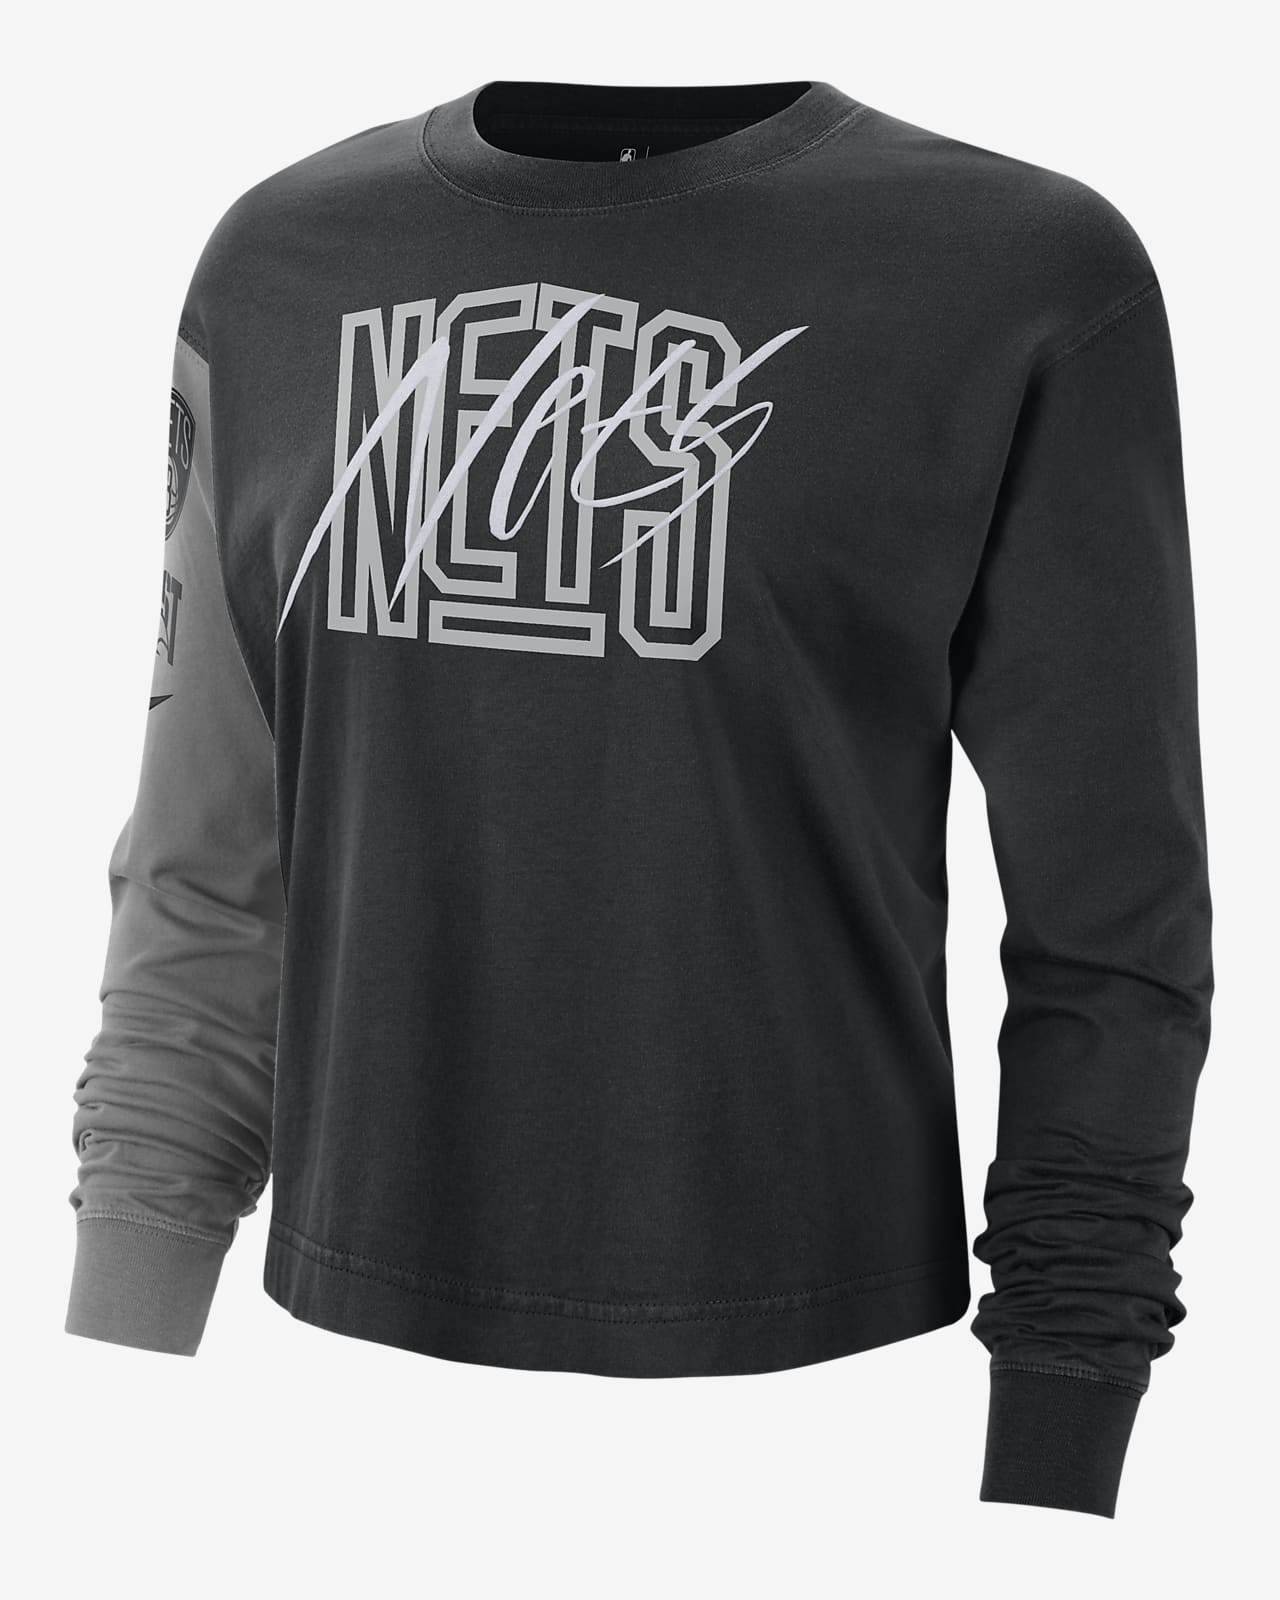 Tee-shirt à manches longues Nike NBA Brooklyn Nets pour femme